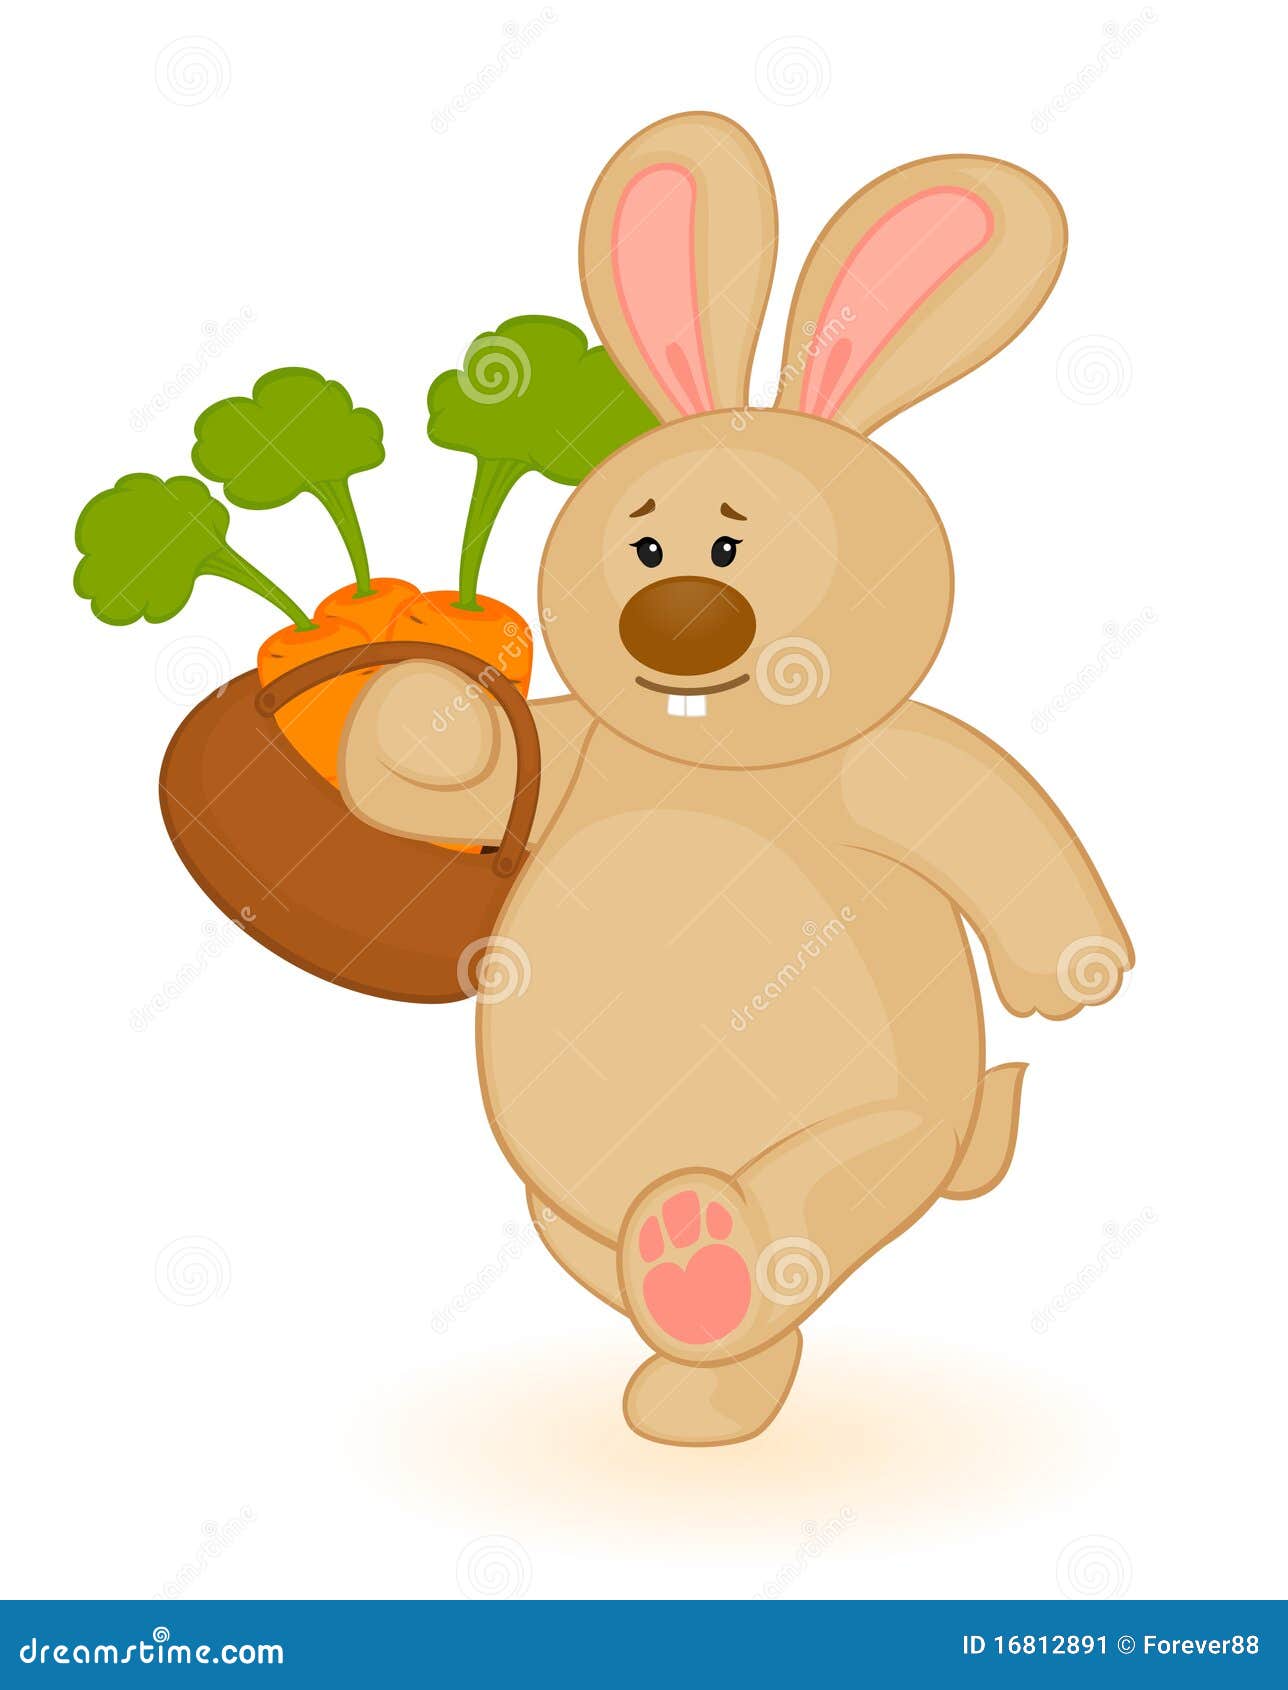 https://thumbs.dreamstime.com/z/cartoon-little-toy-bunny-carrot-16812891.jpg